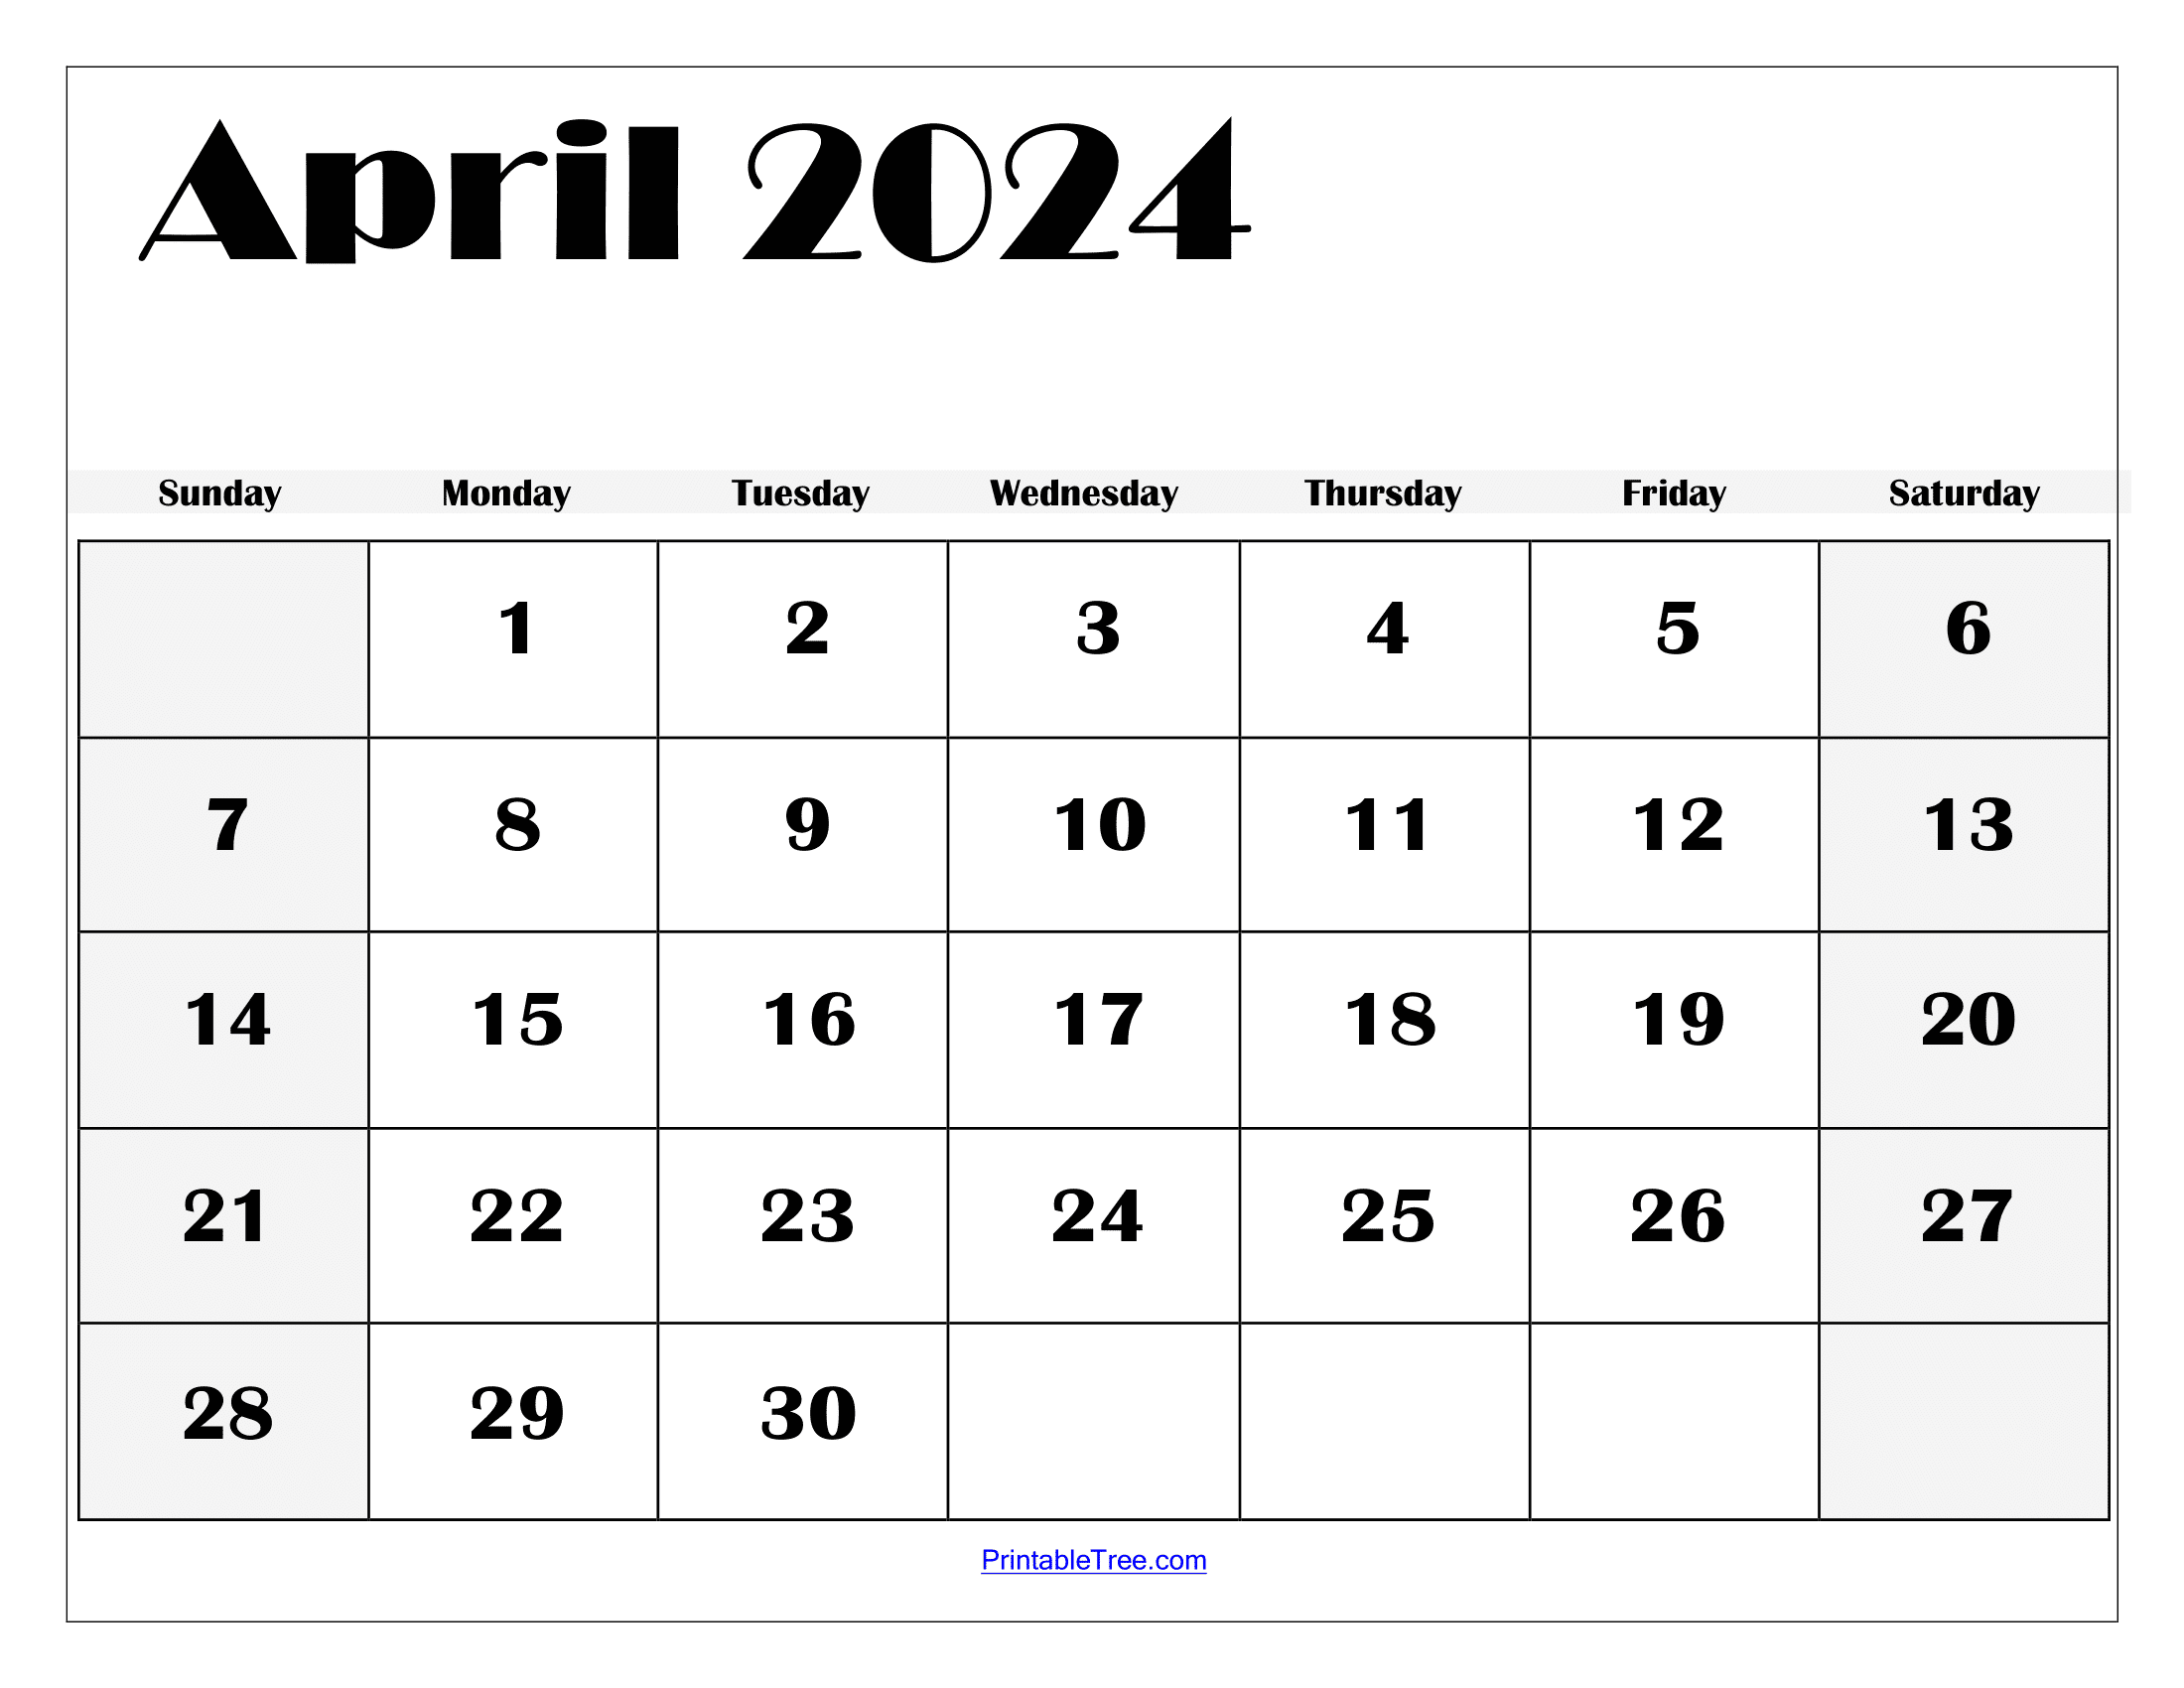 Blank April 2024 Calendar Printable Pdf Template With Holidays for April 2024 Monthly Calendar Printable